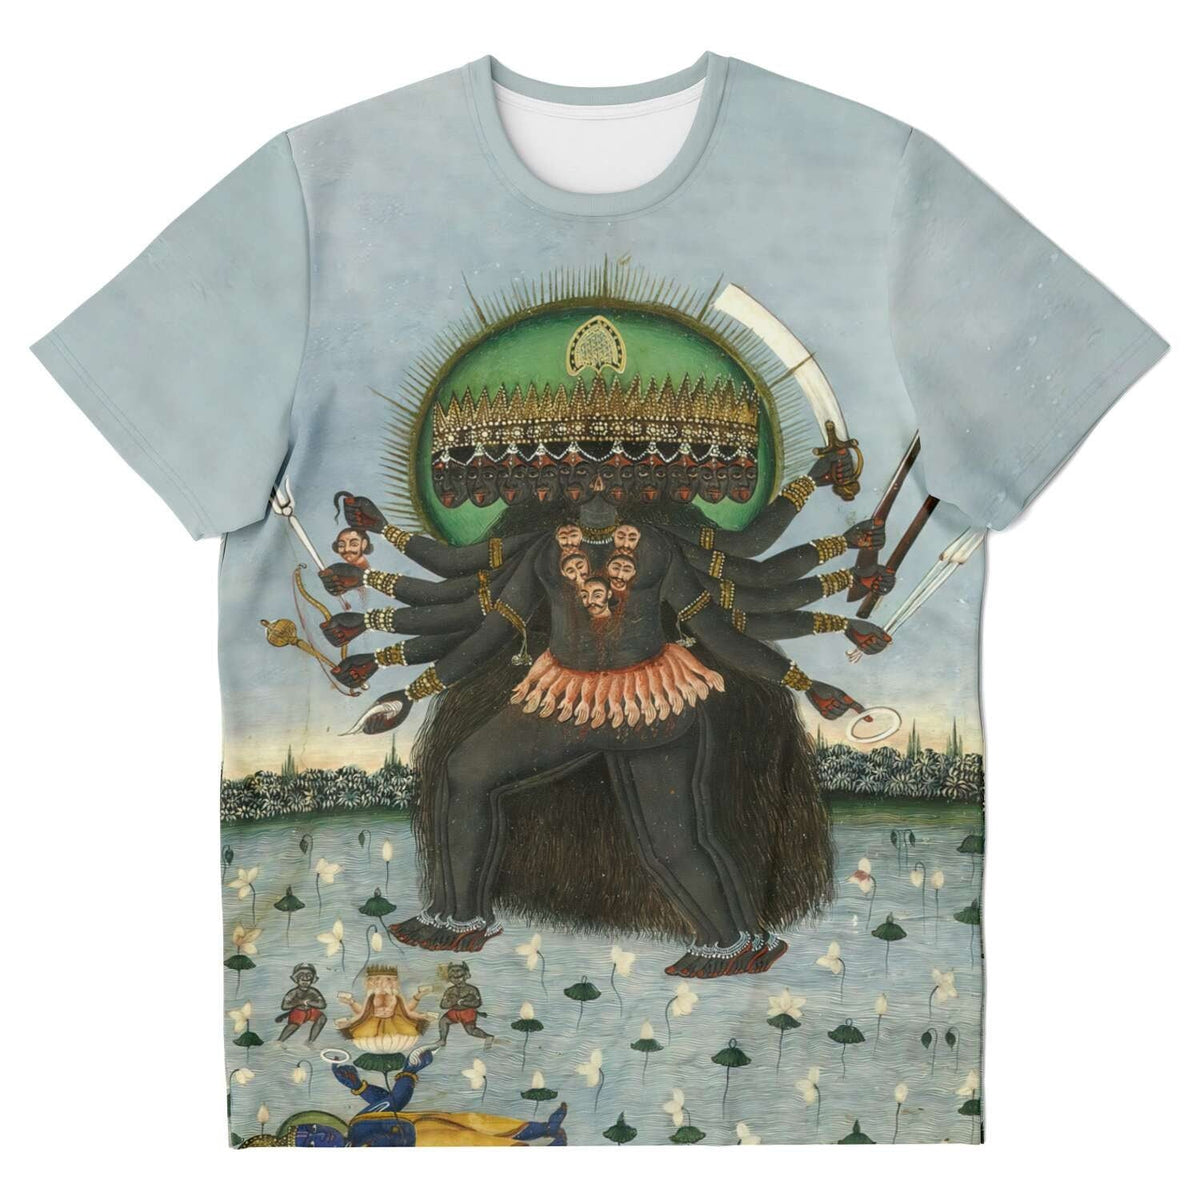 T-shirt Kali Withdraws from Vishnu, as Brahma Emerges from Sleep, Antique Hindu Graphic T-Shirt Tee